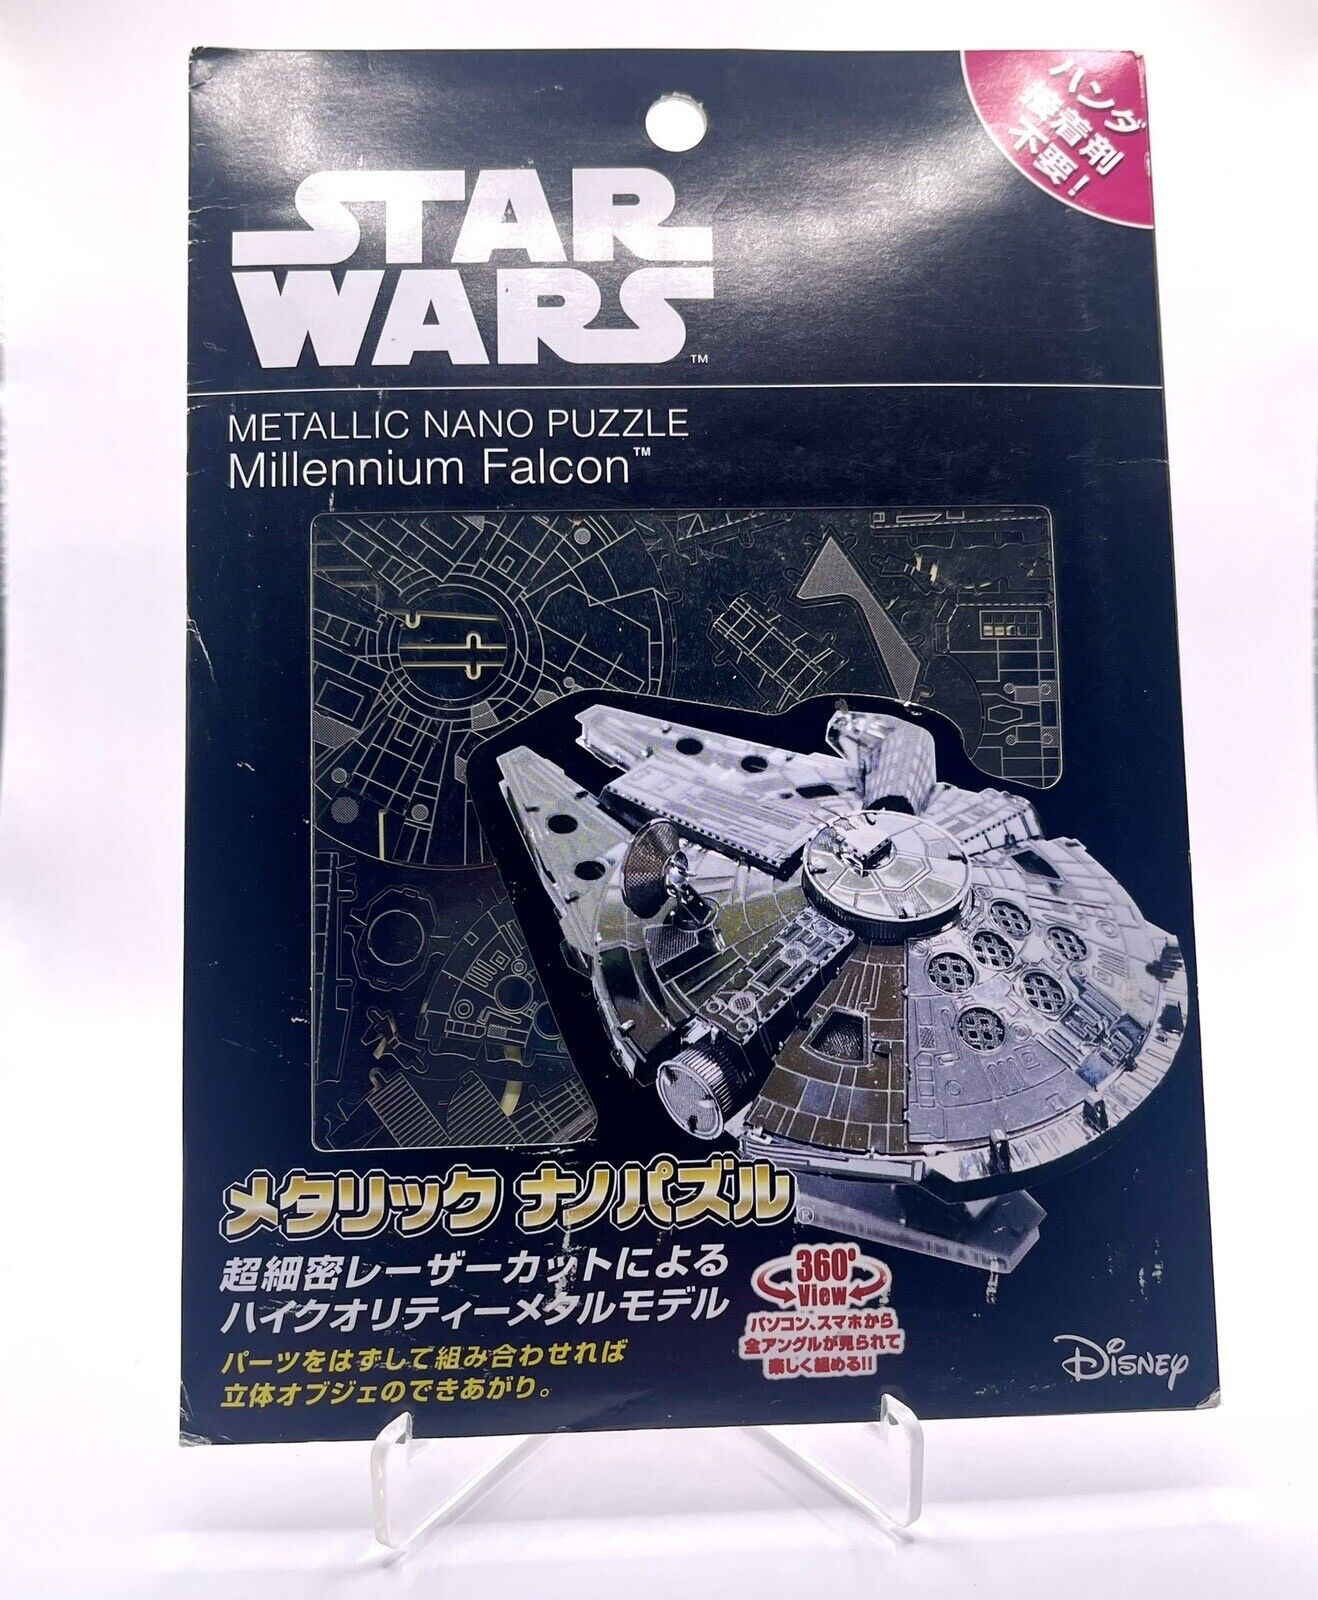 Metallic Nano Puzzle Star Wars Millennium Falcon - DISNEY JAPAN